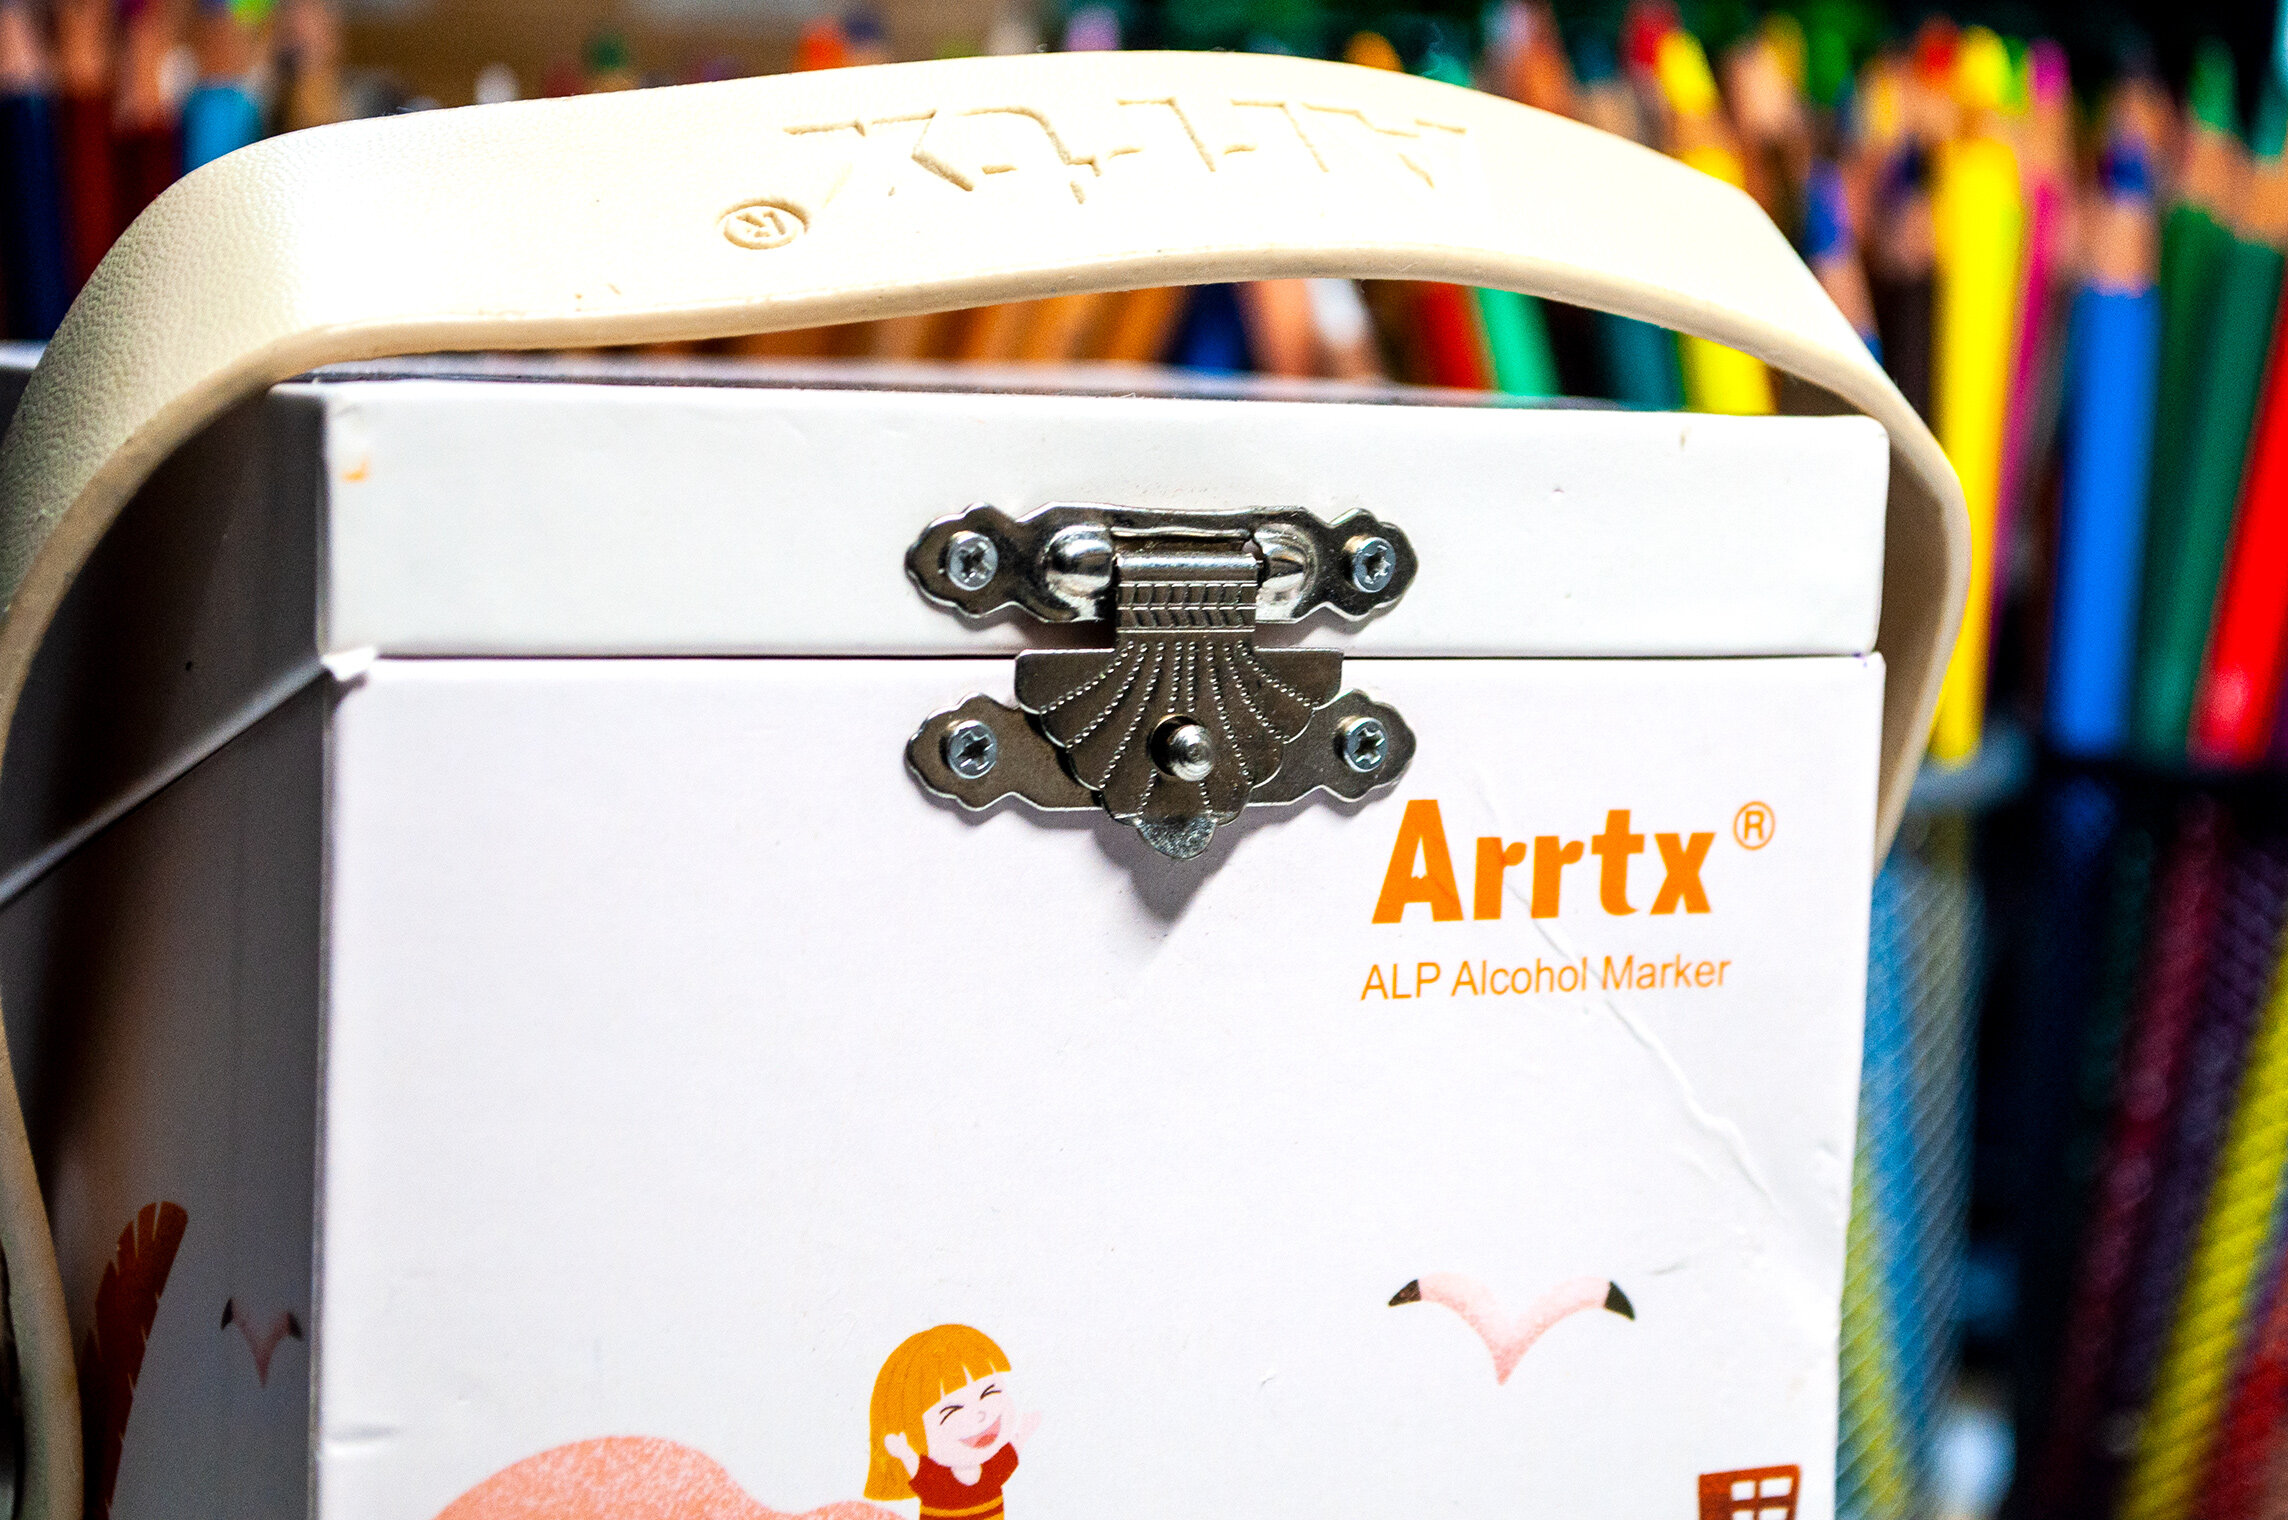 Arrtx ALP 40 Pastel Colors Alcohol Markers Double Tipped Permanent